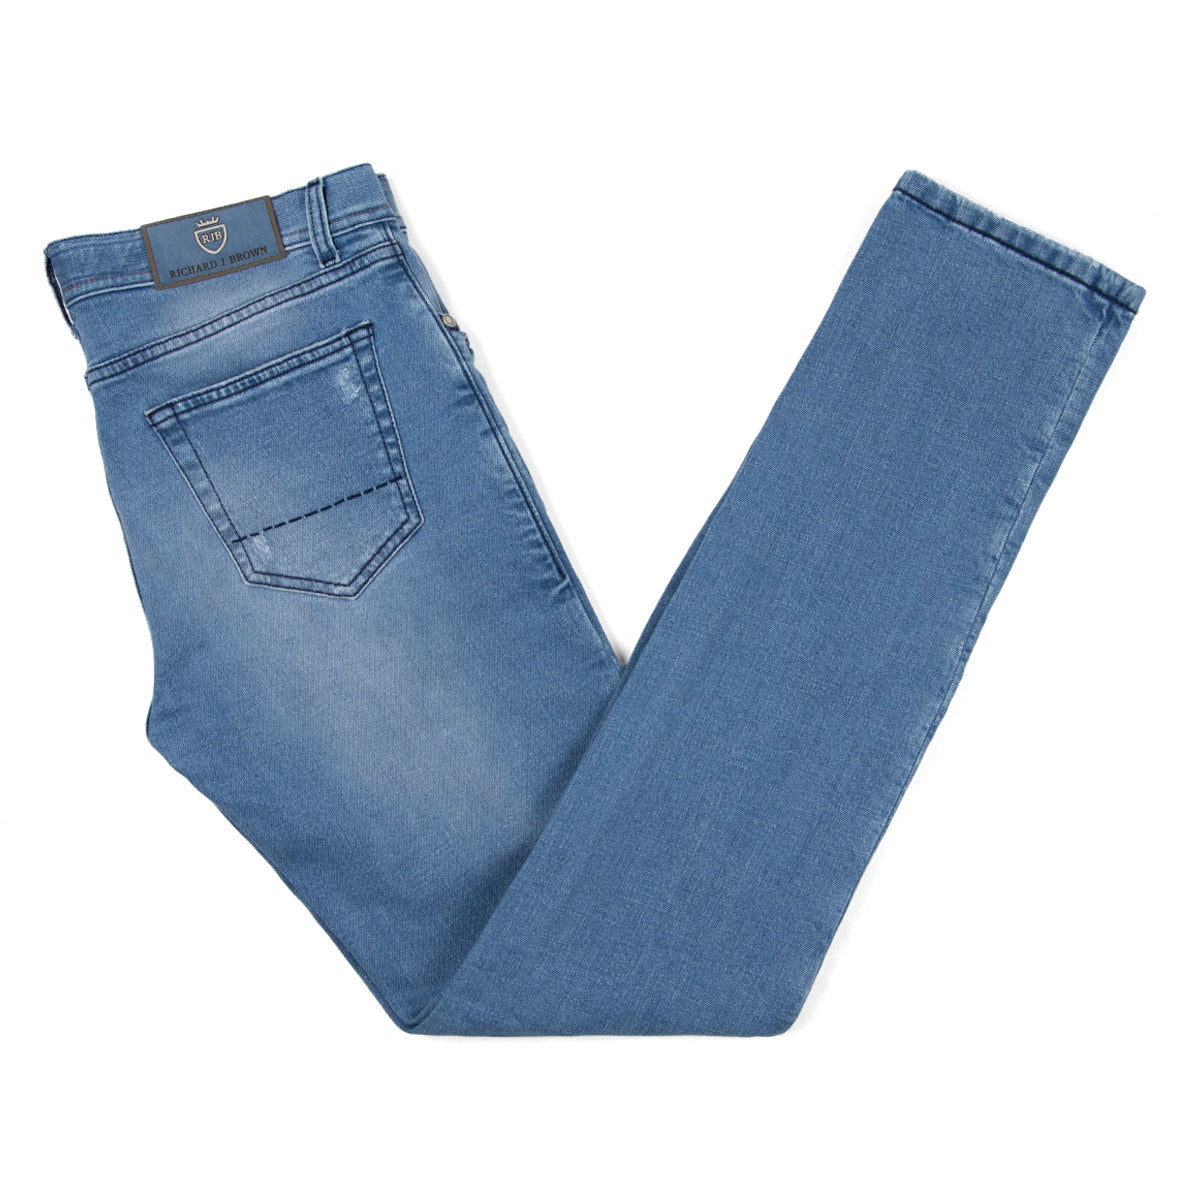 Light Wash Distressed Denim 'Tokyo' Slim Fit Jeans  Richard J Brown   